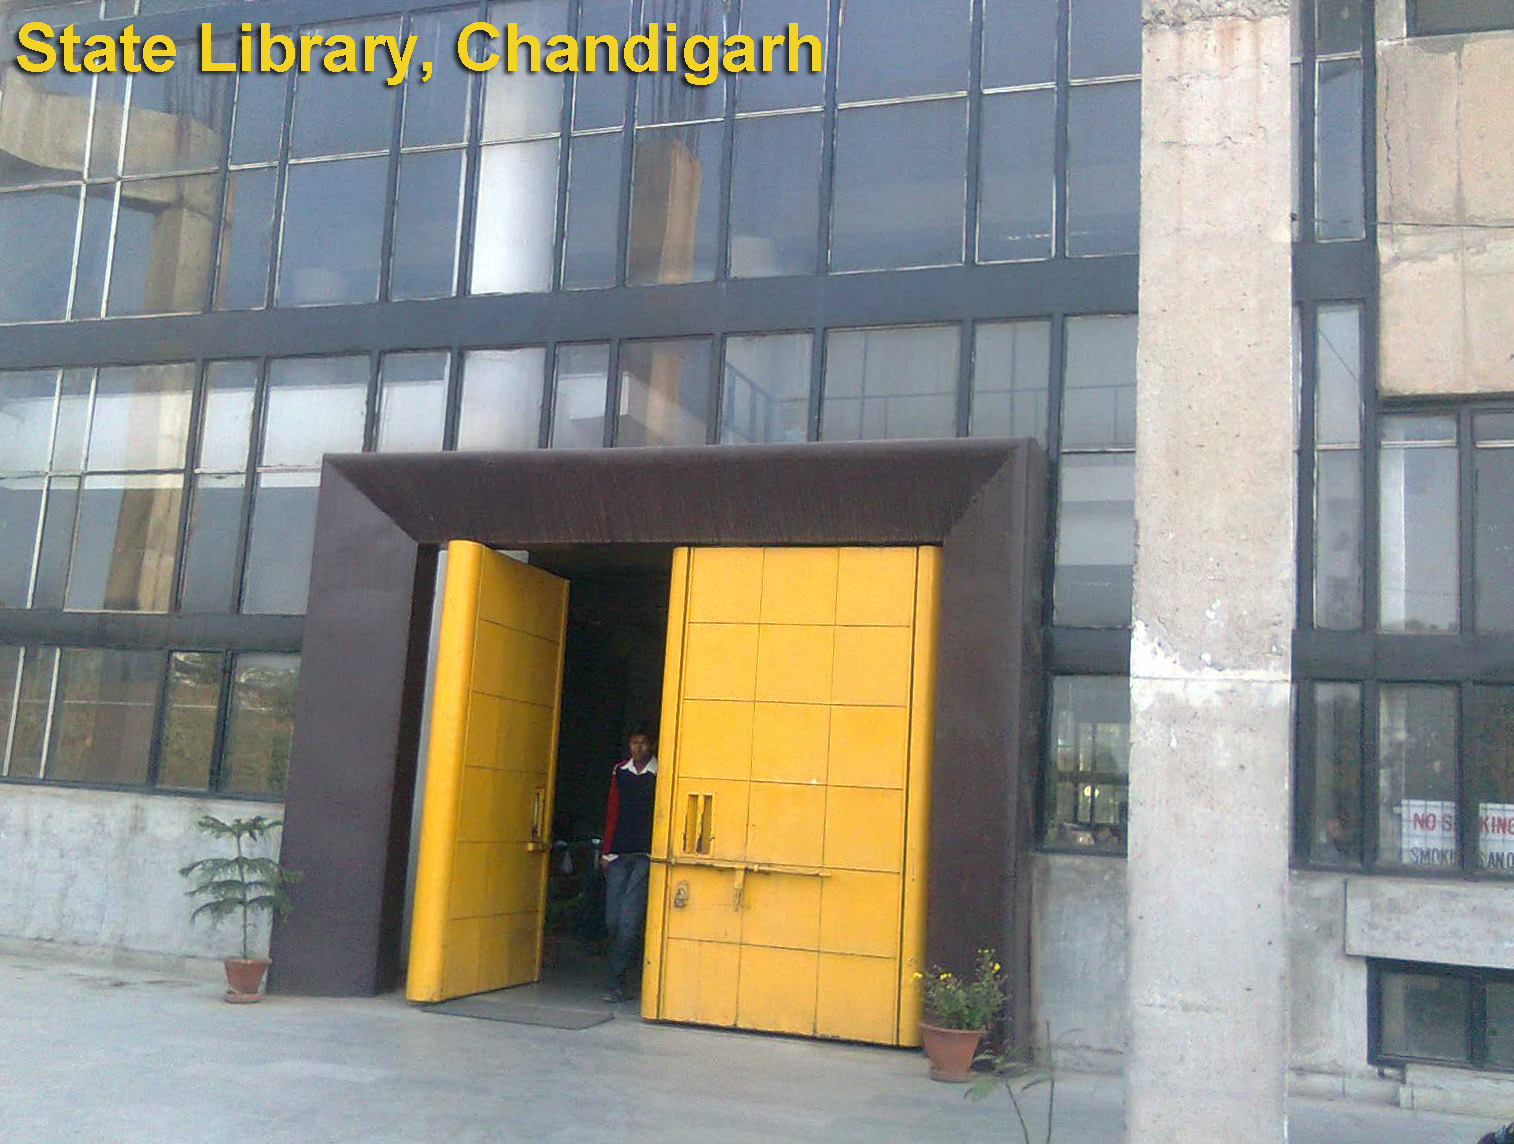 State Library, Chandigarh